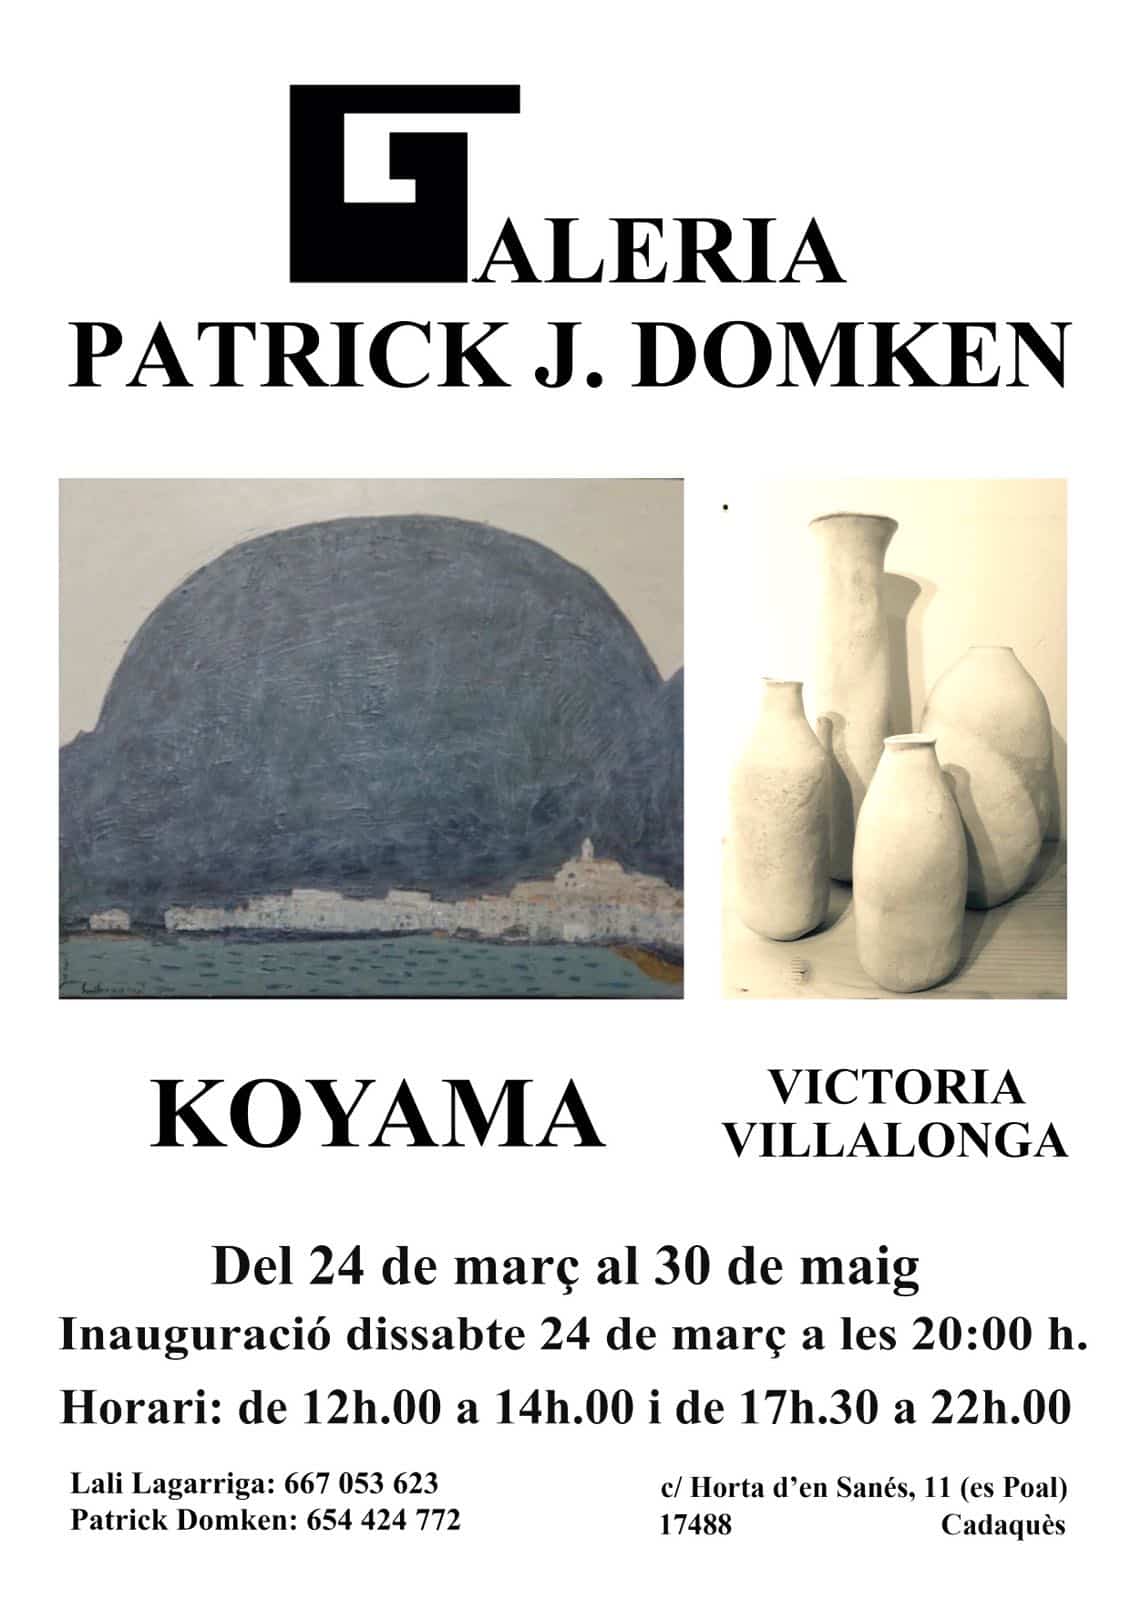 Galeria Patrick j. Domken